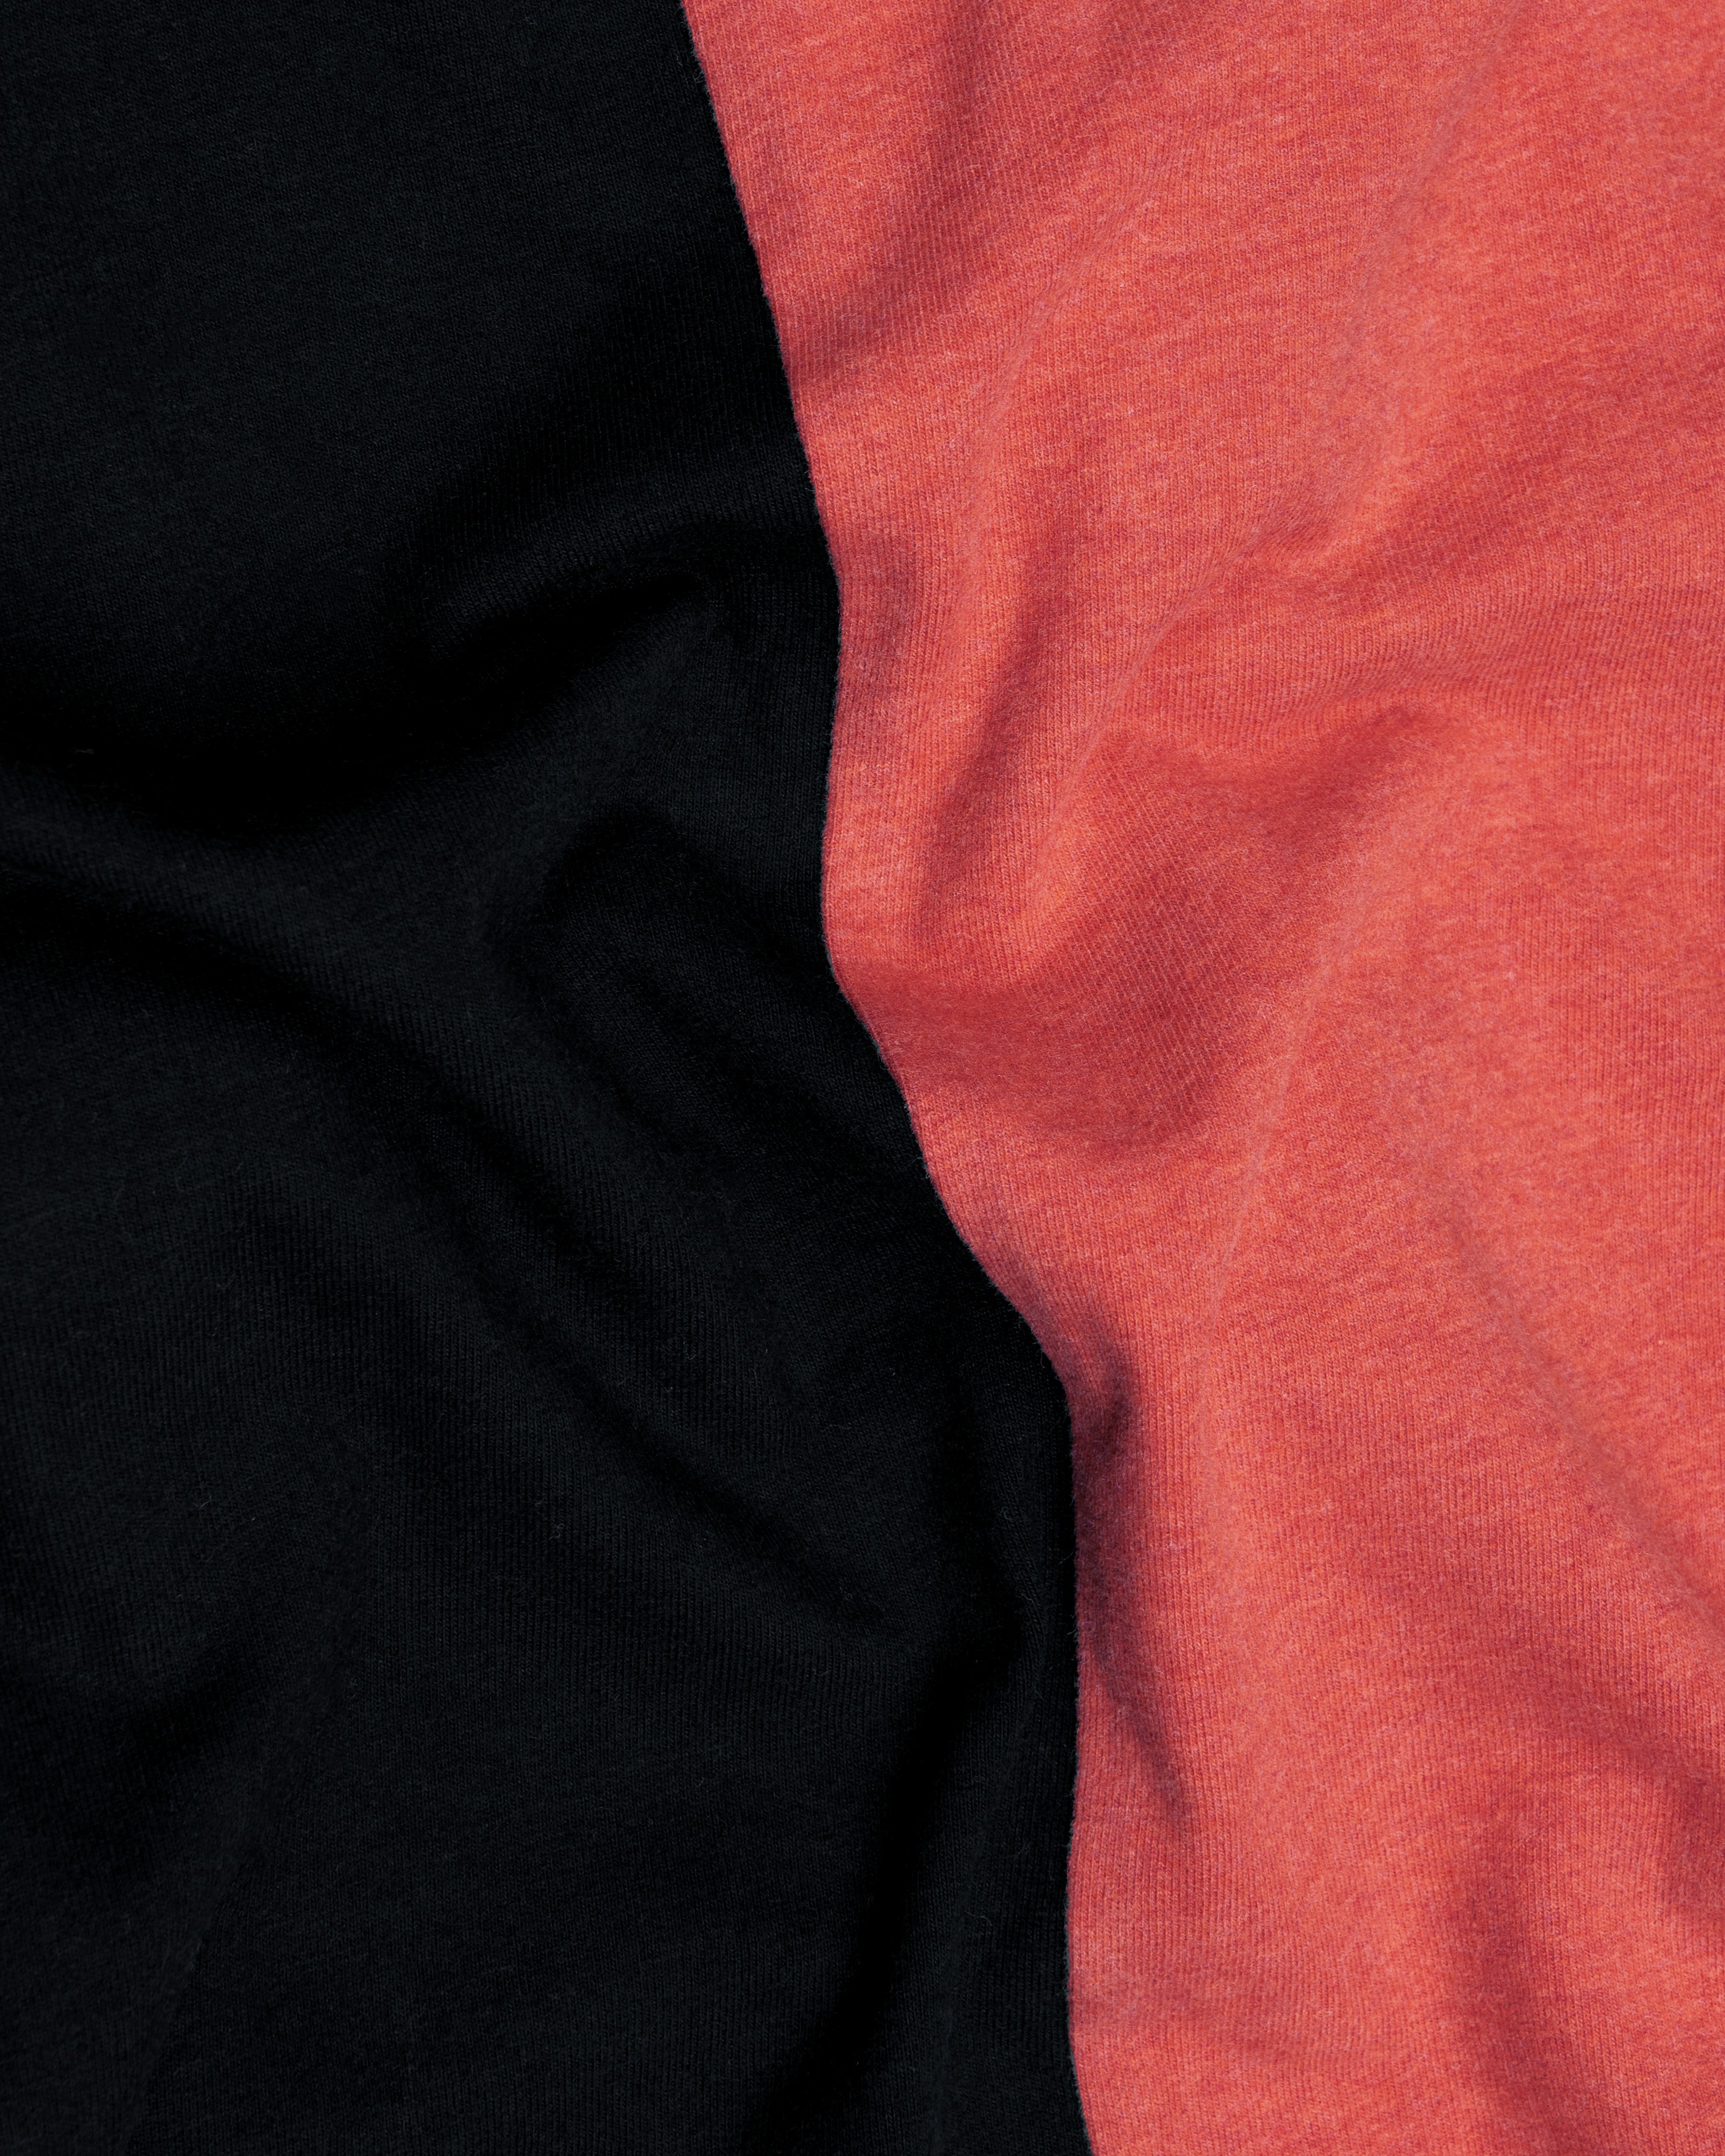 Jade Black and Chestnut Red Premium Cotton T-shirt TS849-S, TS849-M, TS849-L, TS849-XL, TS849-XXL